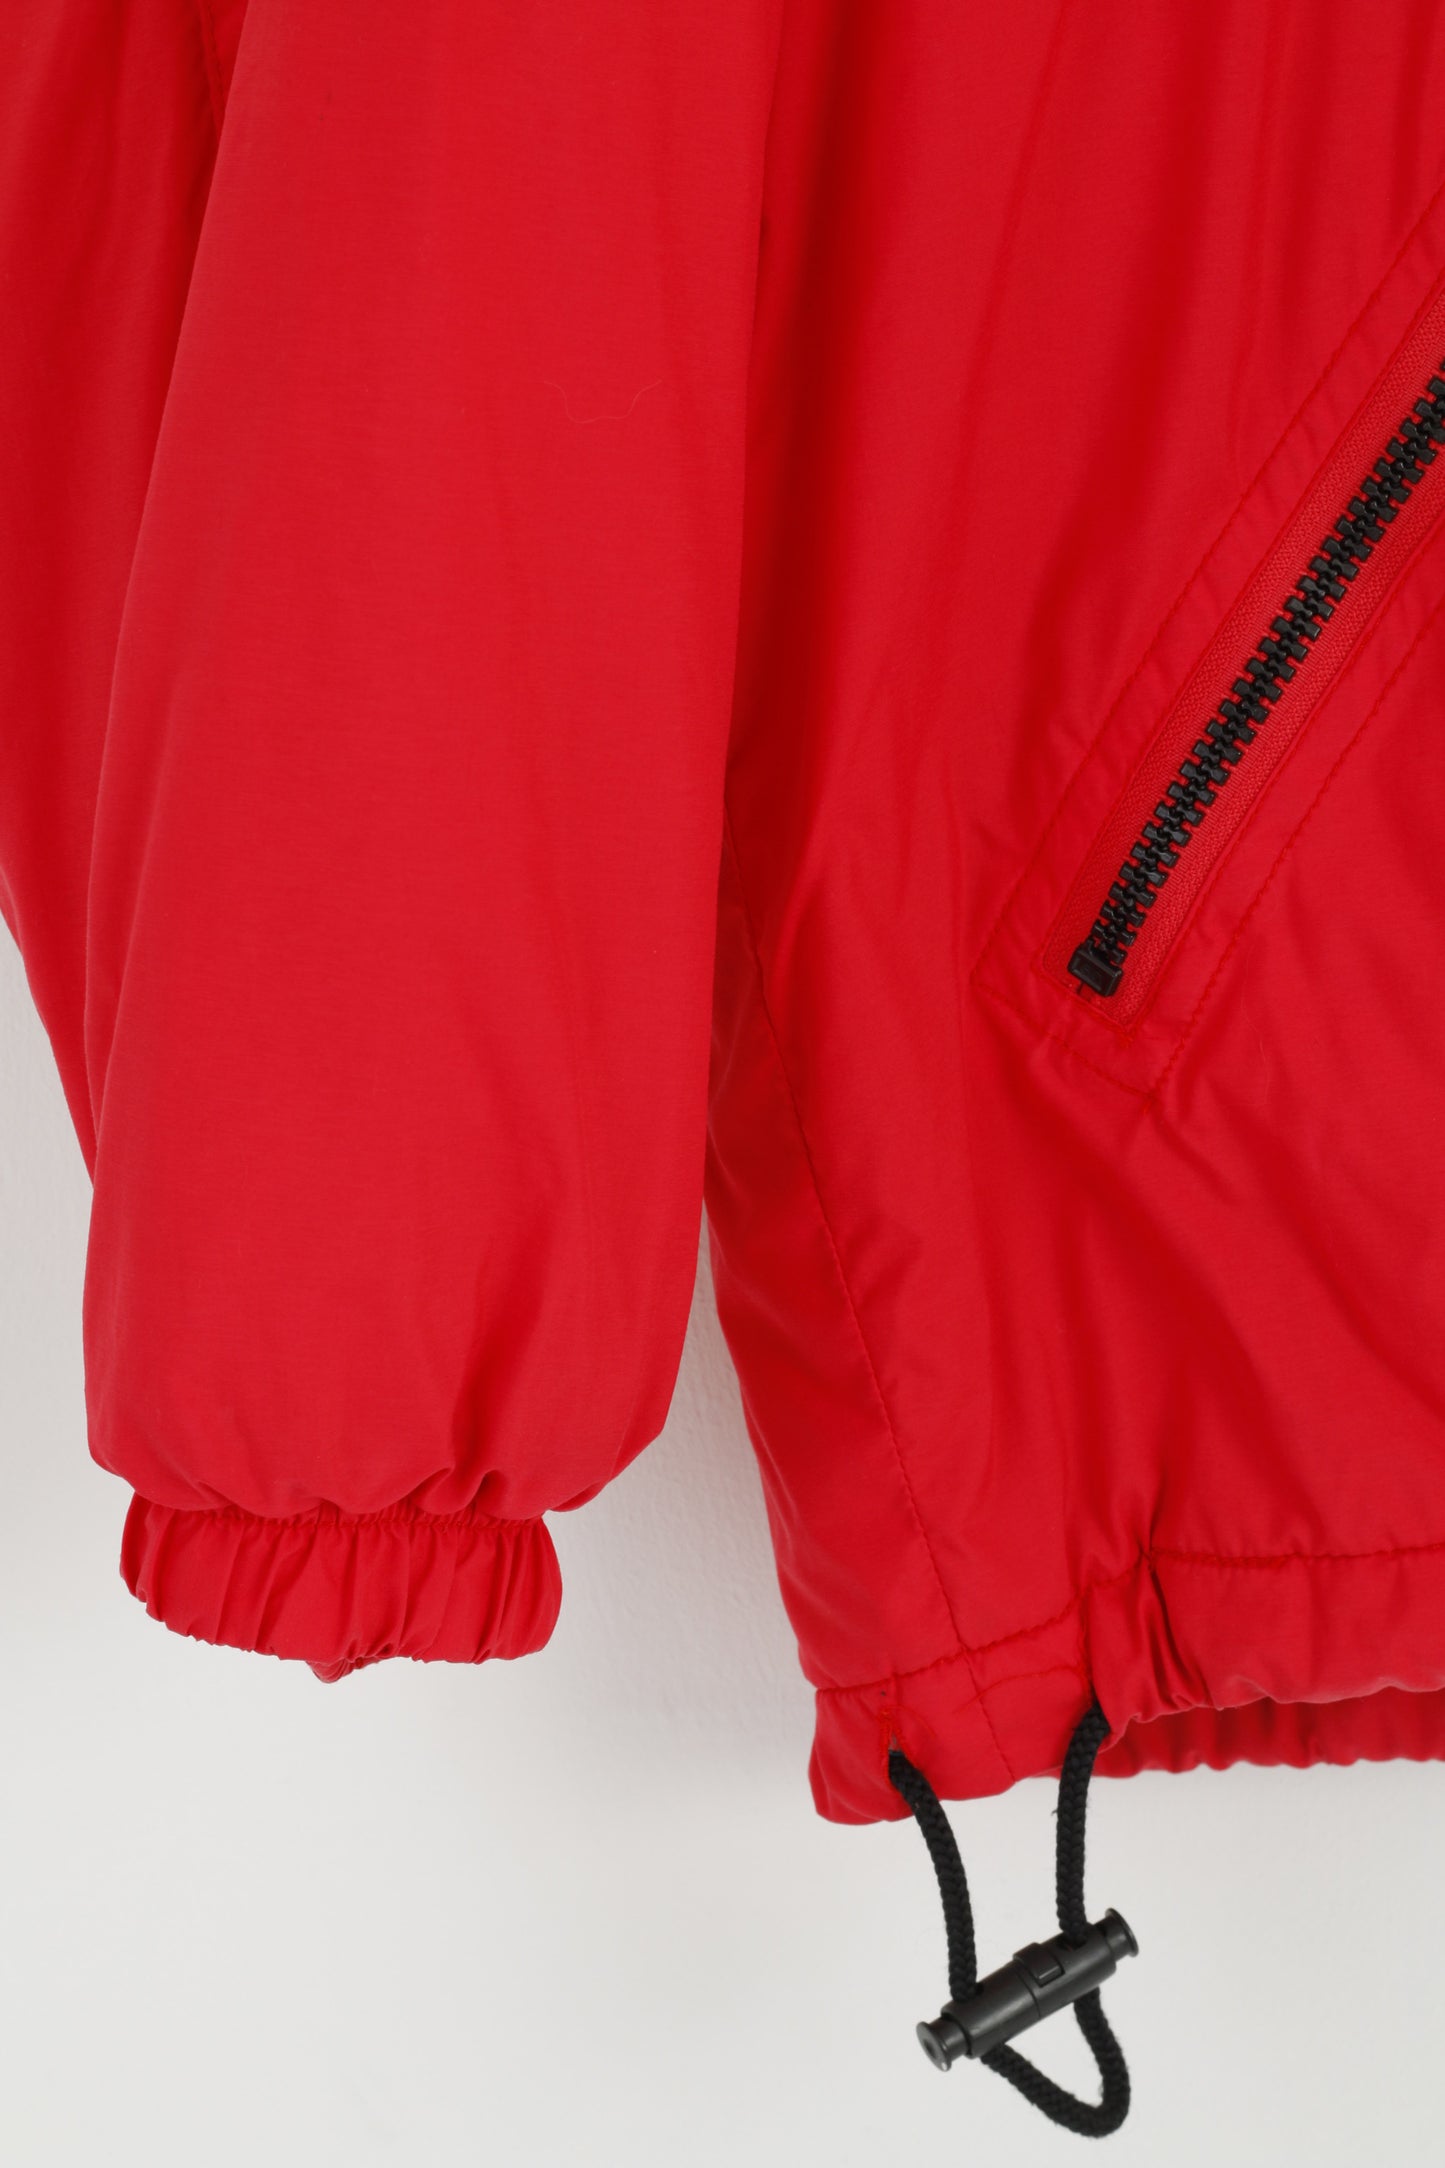 O'Neill Sportswear Men L Jacket Red Ski Snowboarding Pullover Zip Neck Padded Vintage Top